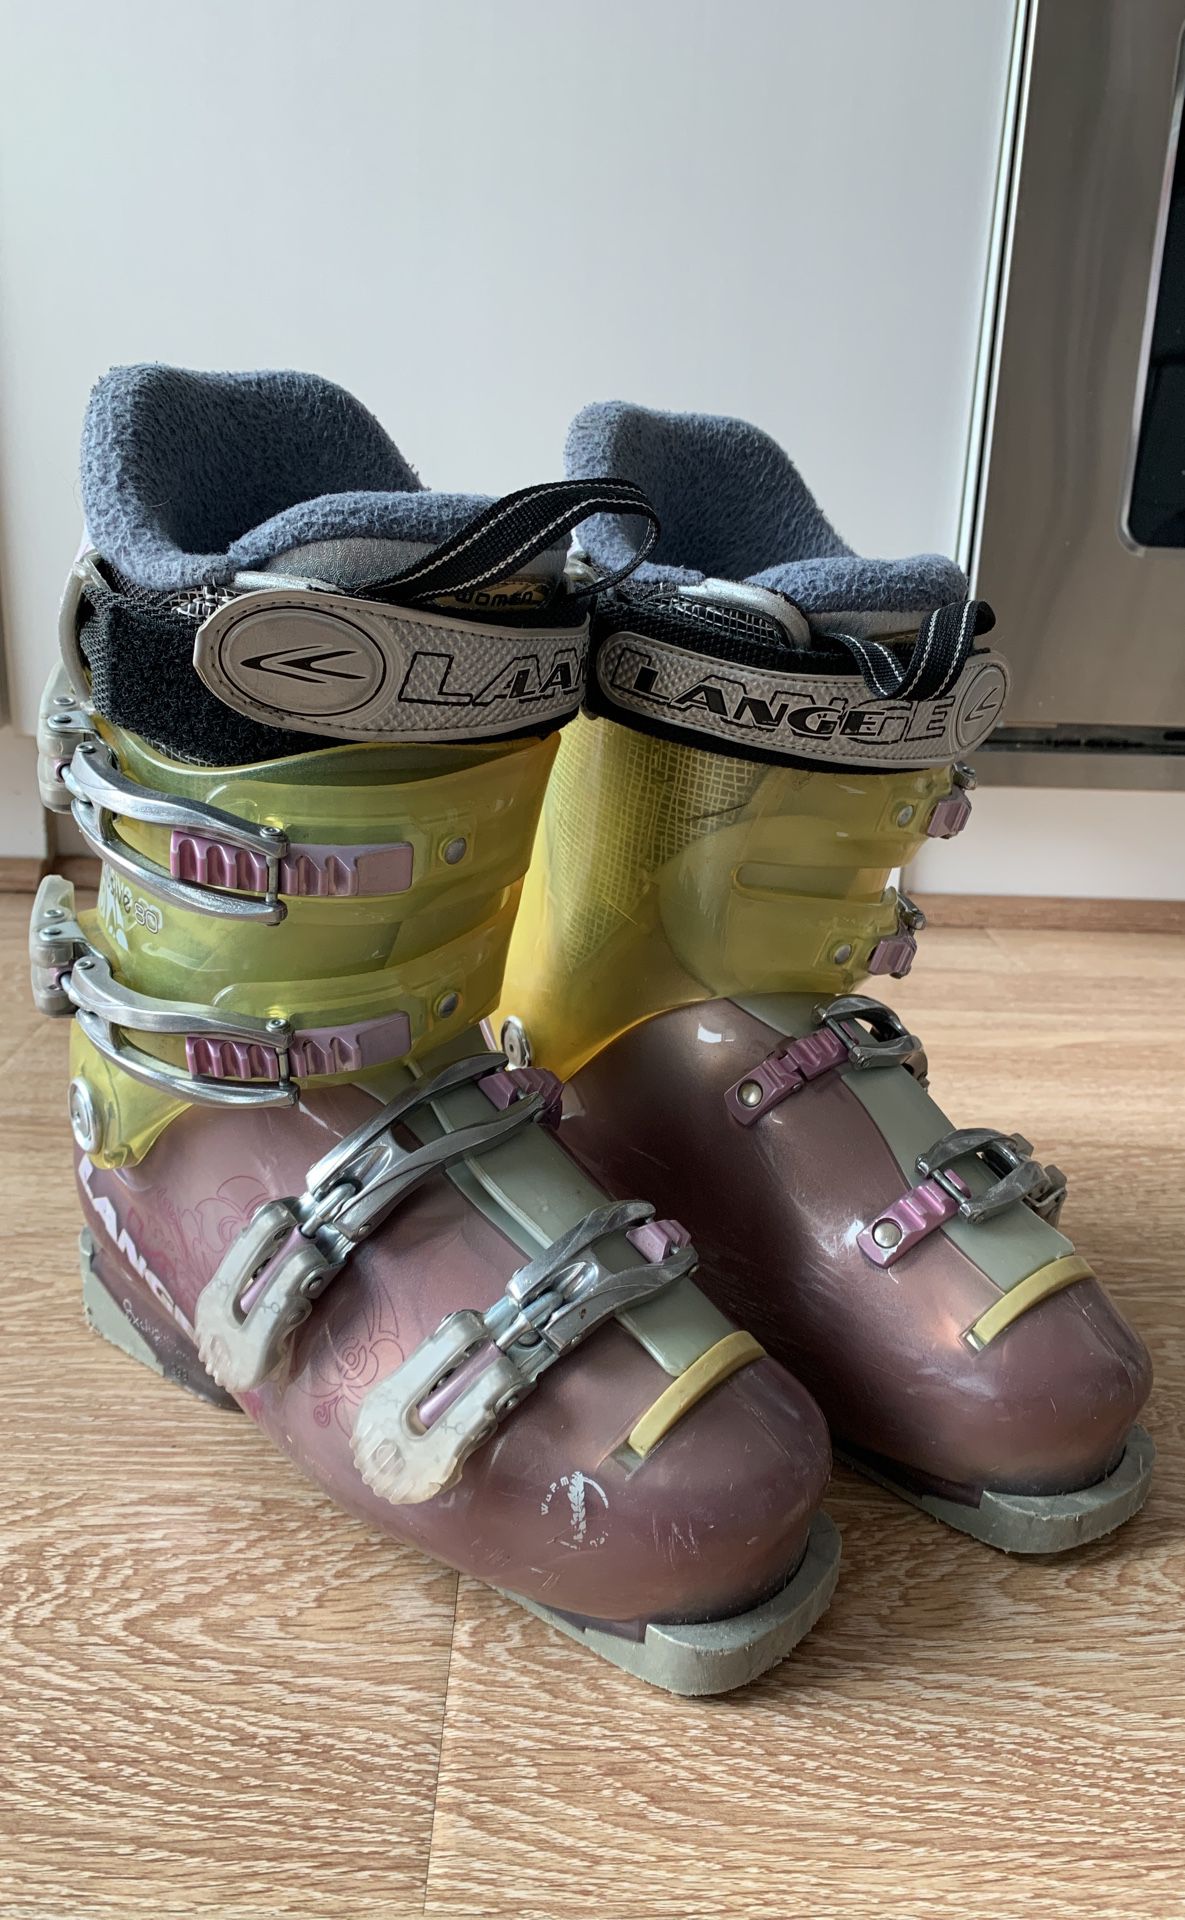 Lange Ski Boots - Size 25.5 (women’s 8)